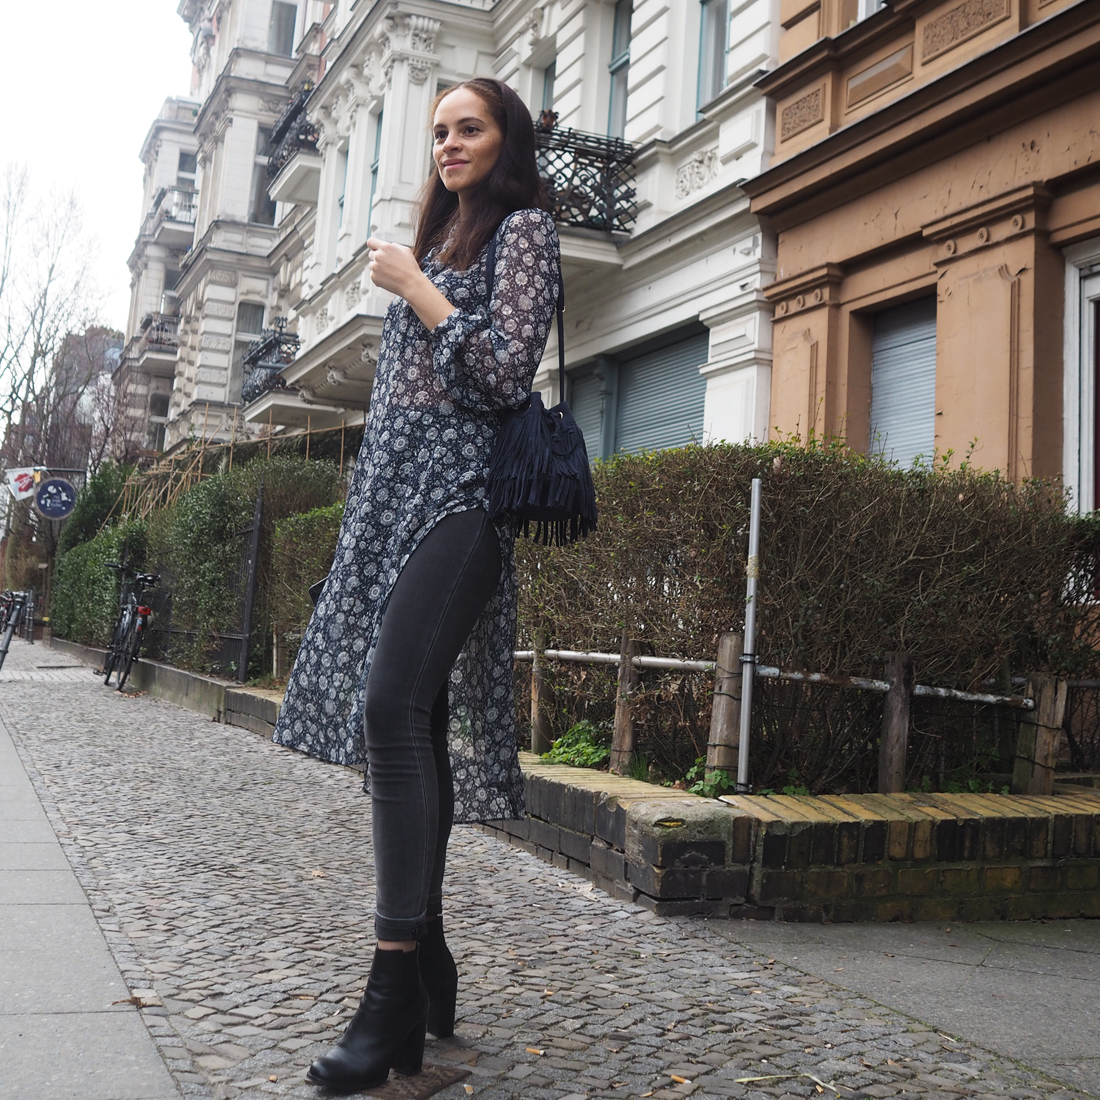 Fashion 4 ME platform for Alexa Berlin + win 2x50Euros Voucher for the mall